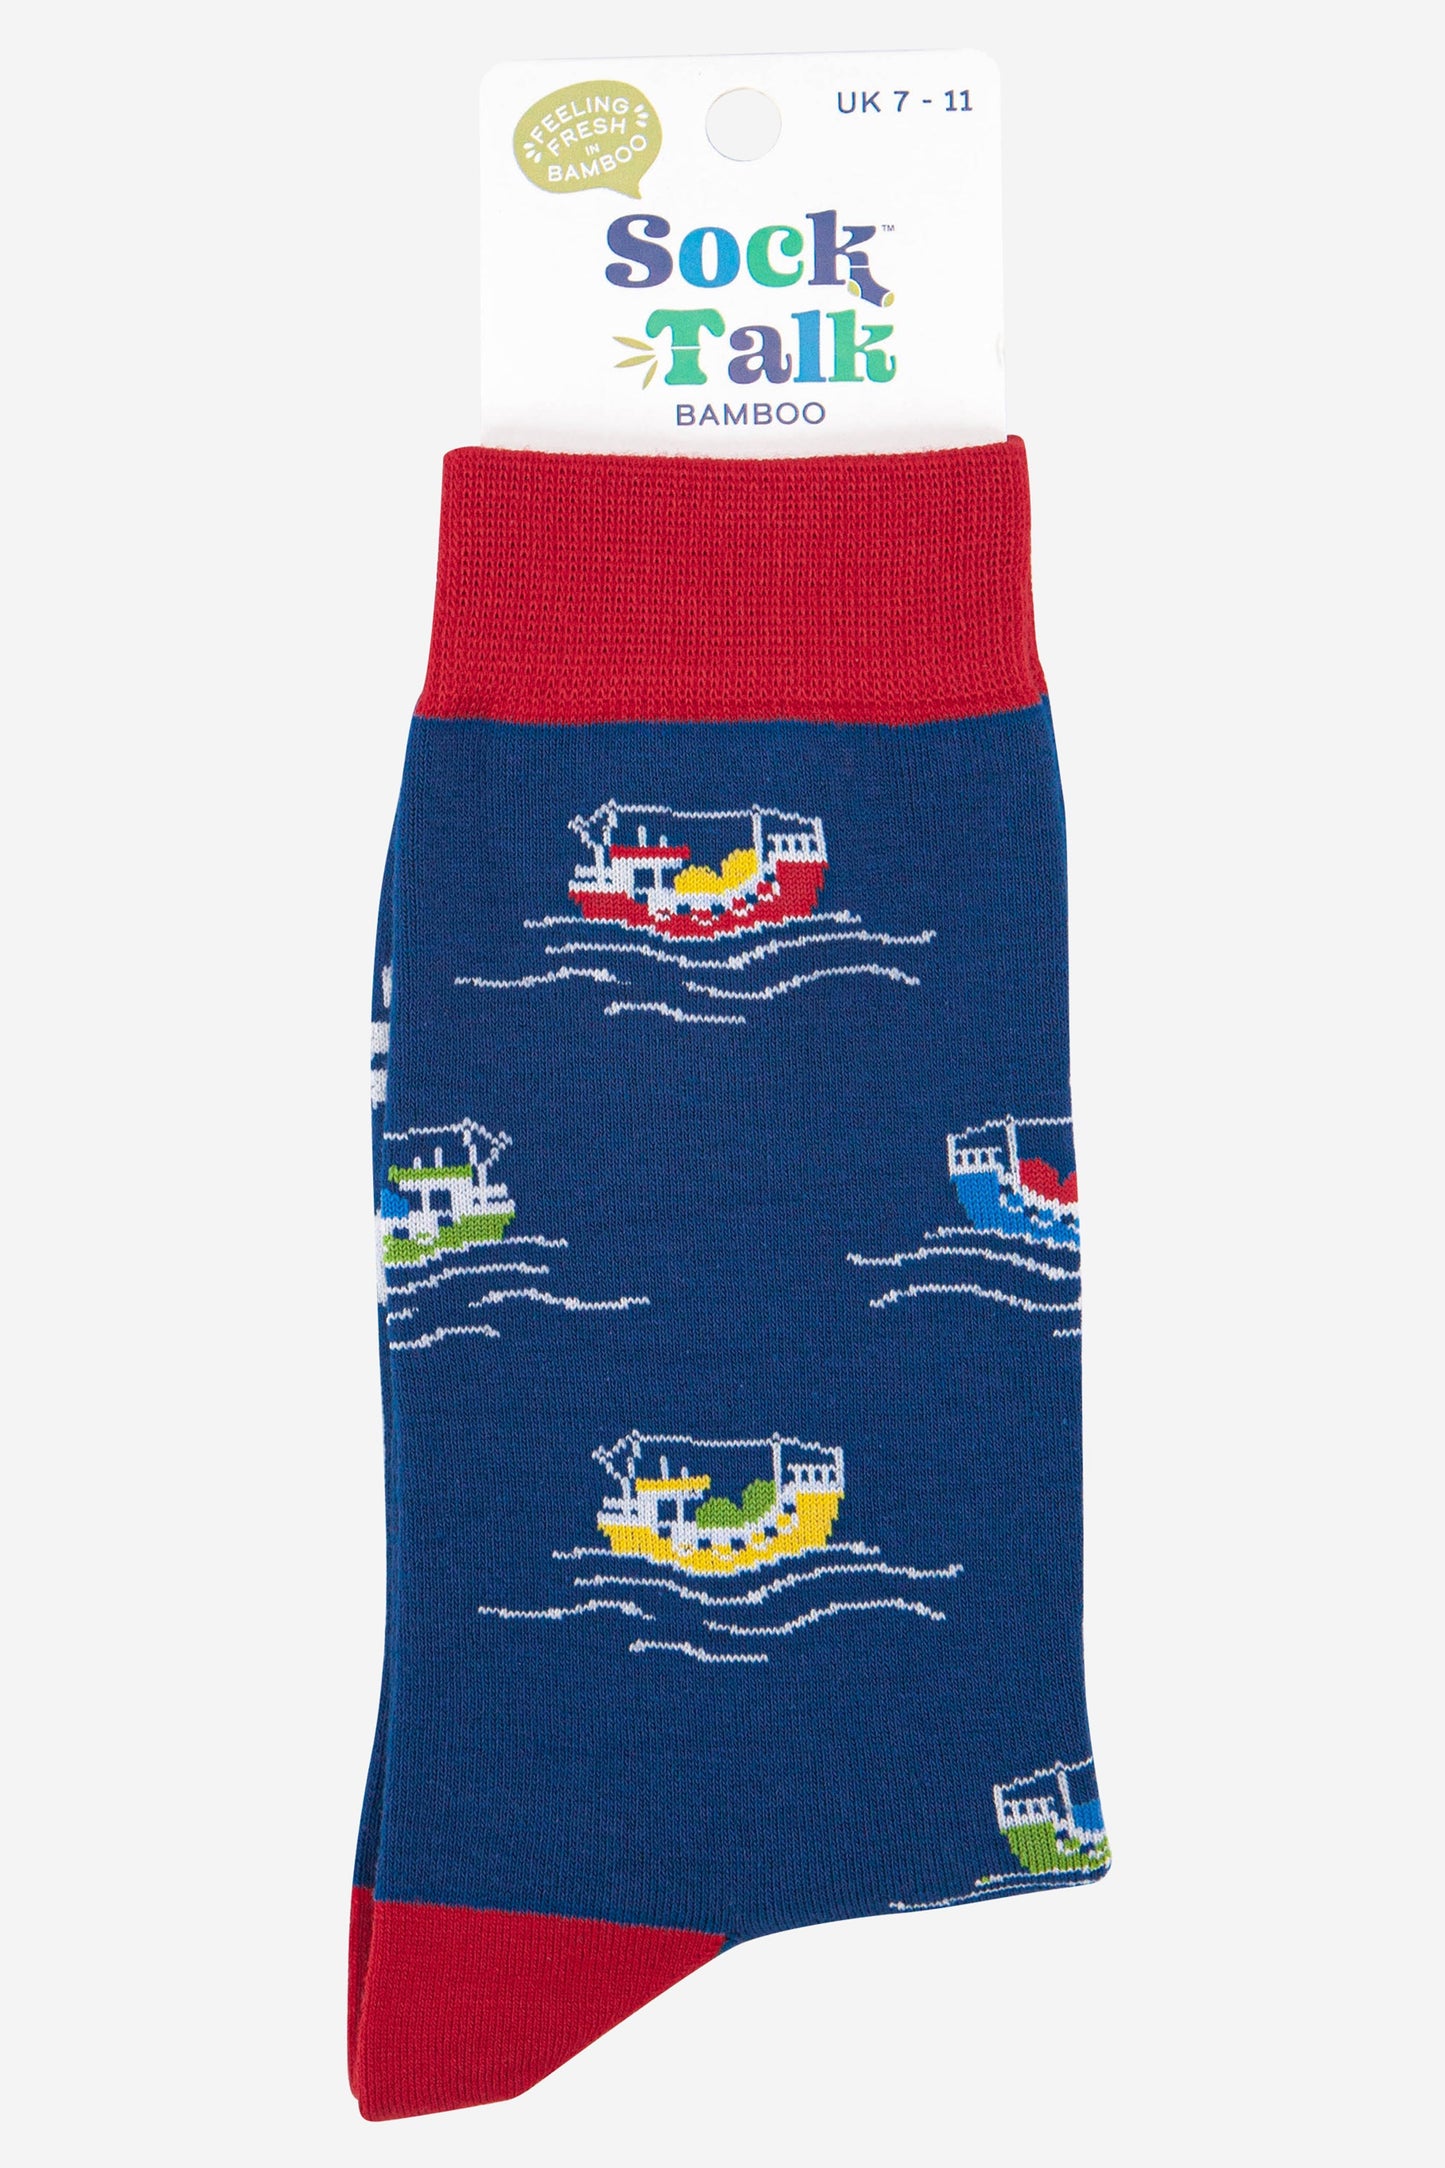 mens blue and red fishing boat nautical bamboo socks uk size 7-11